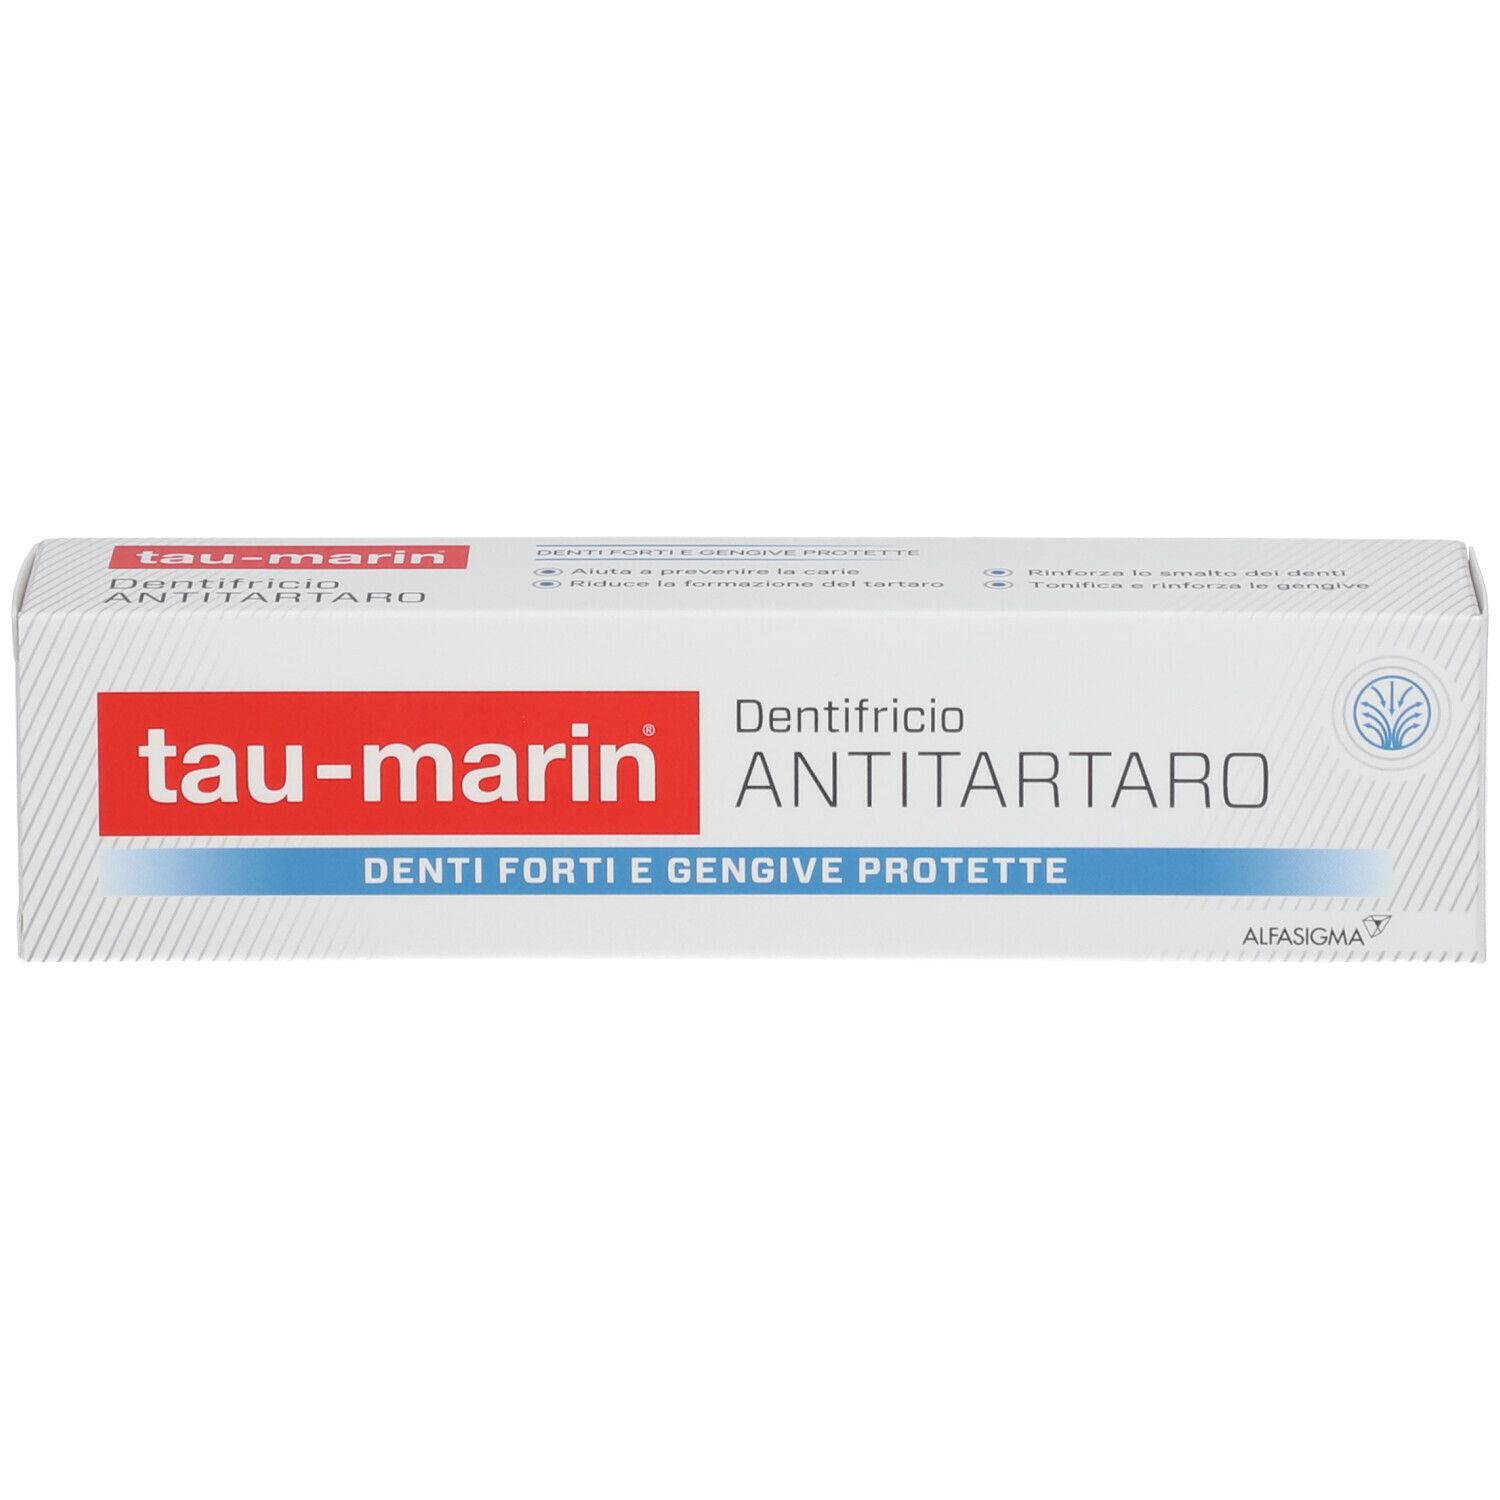 tau-marin® Dentifricio ANTITARTARO